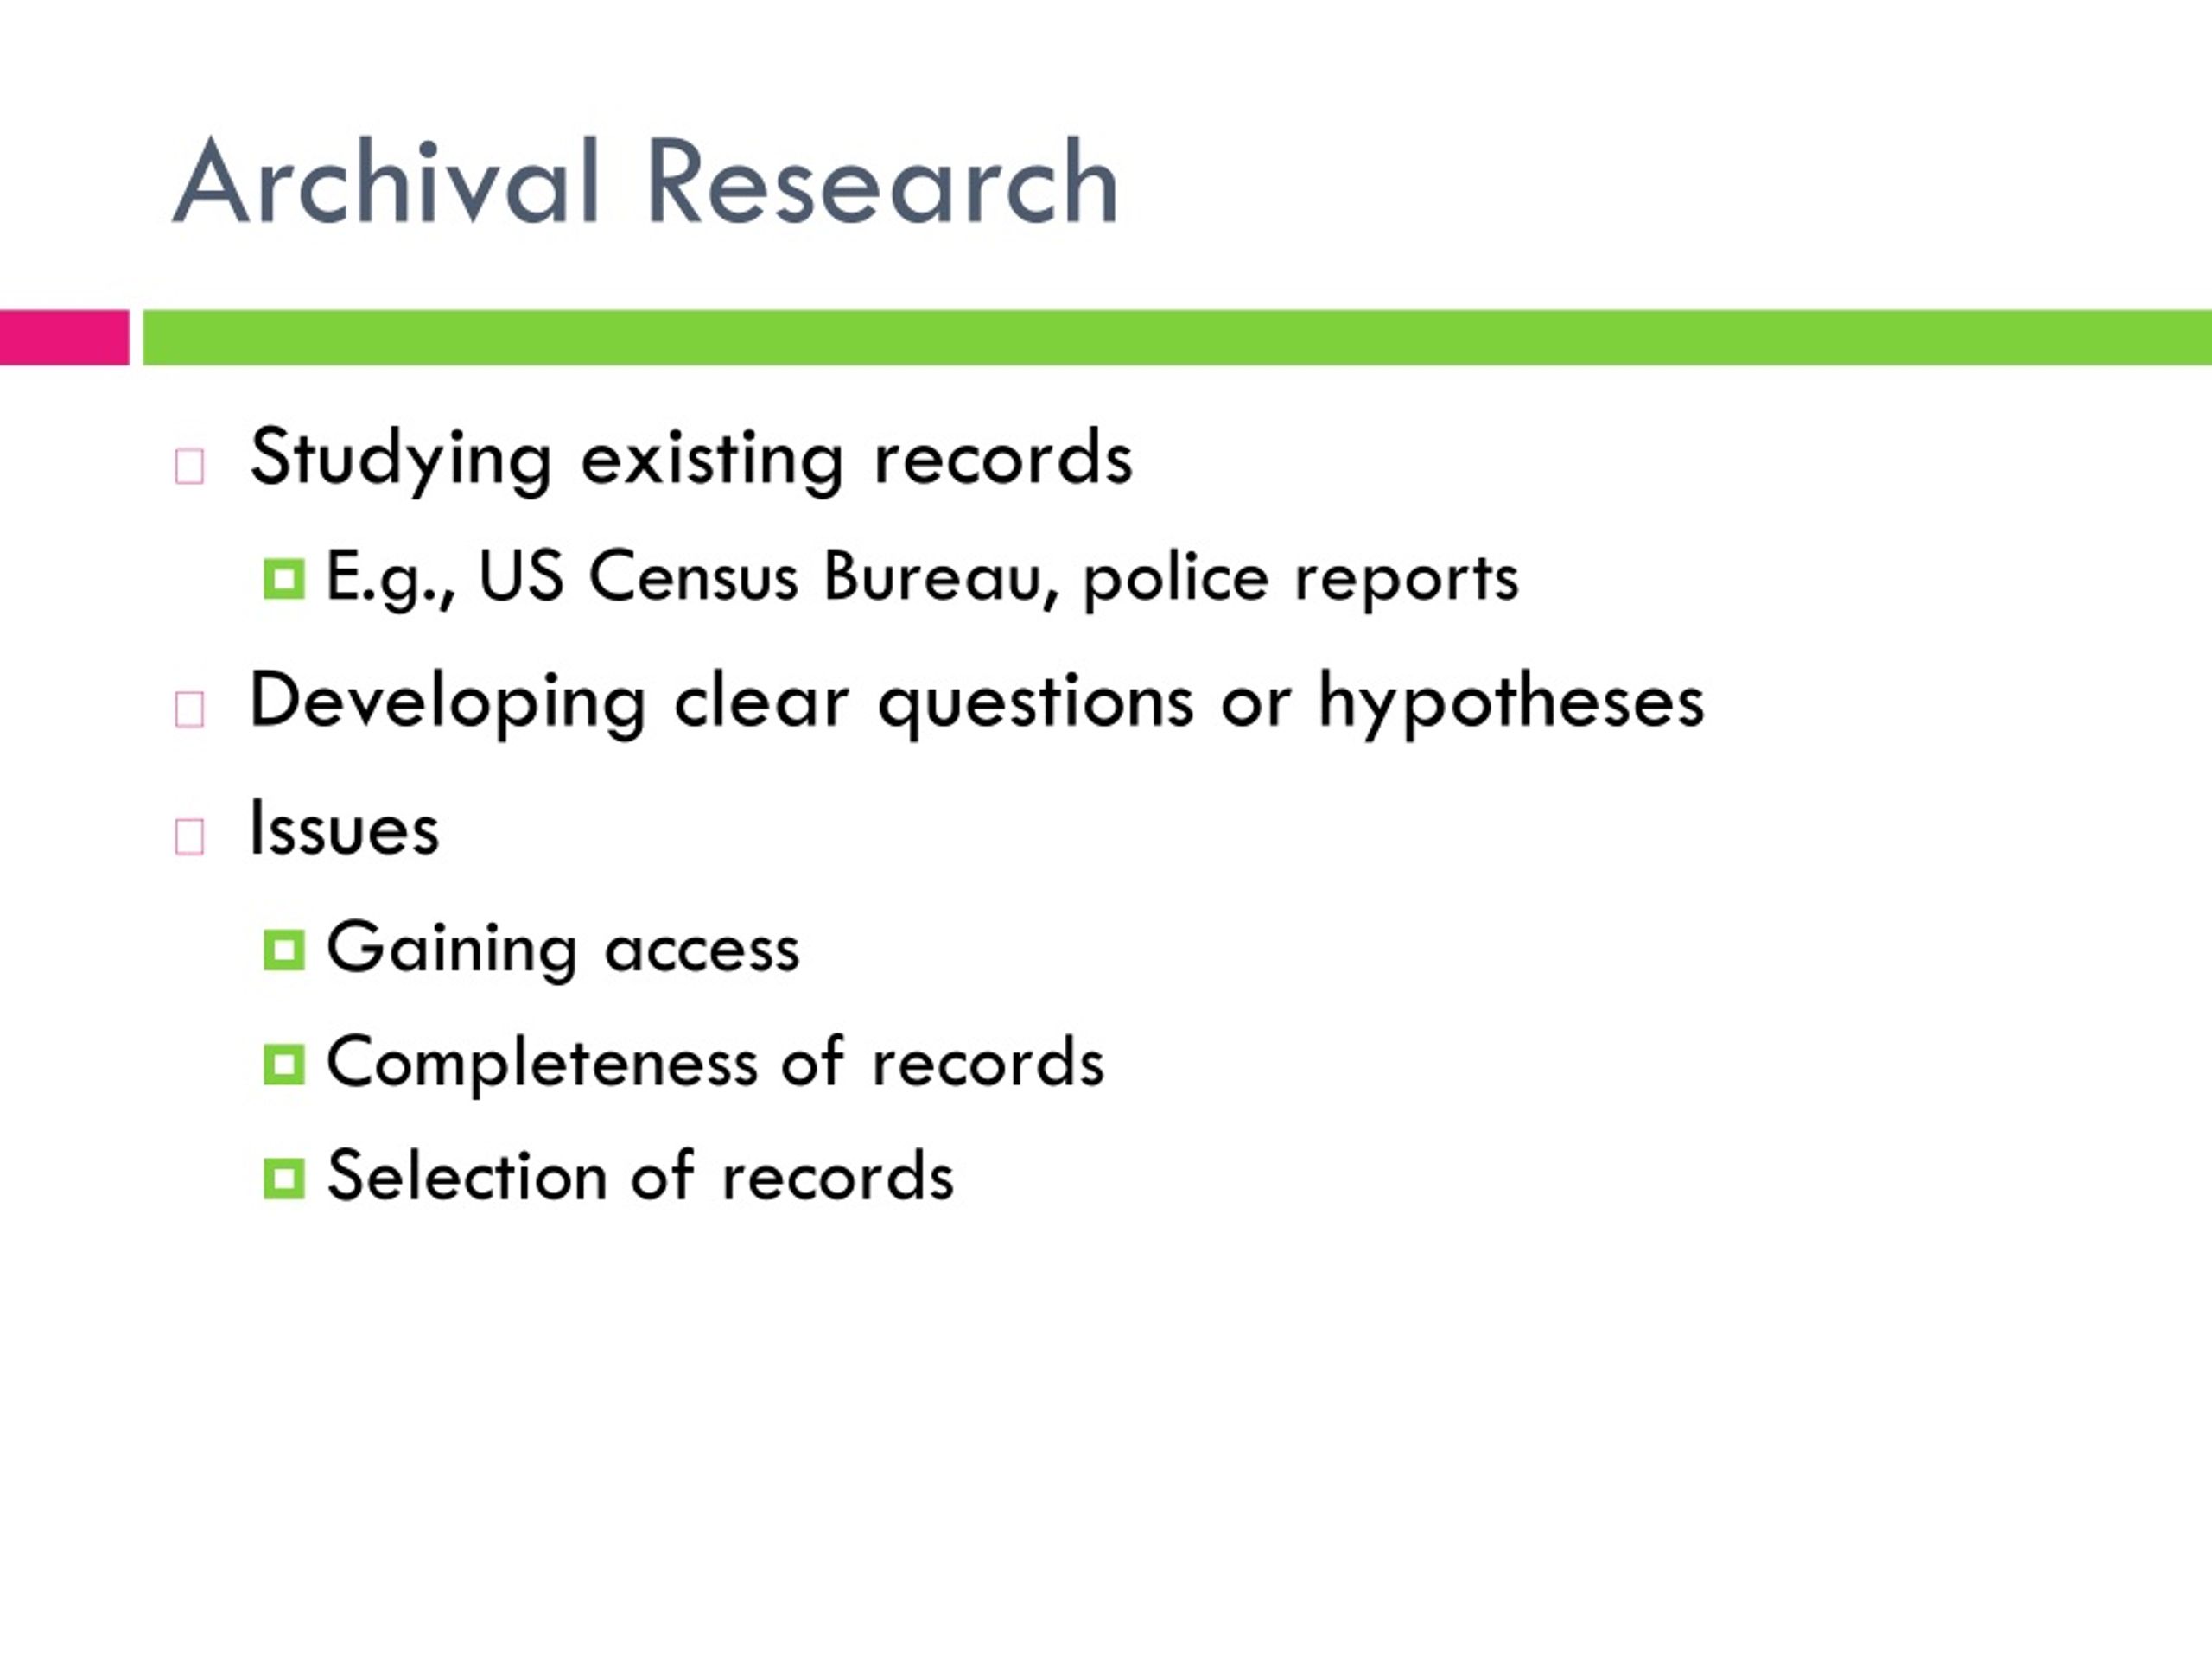 meta analysis vs archival research